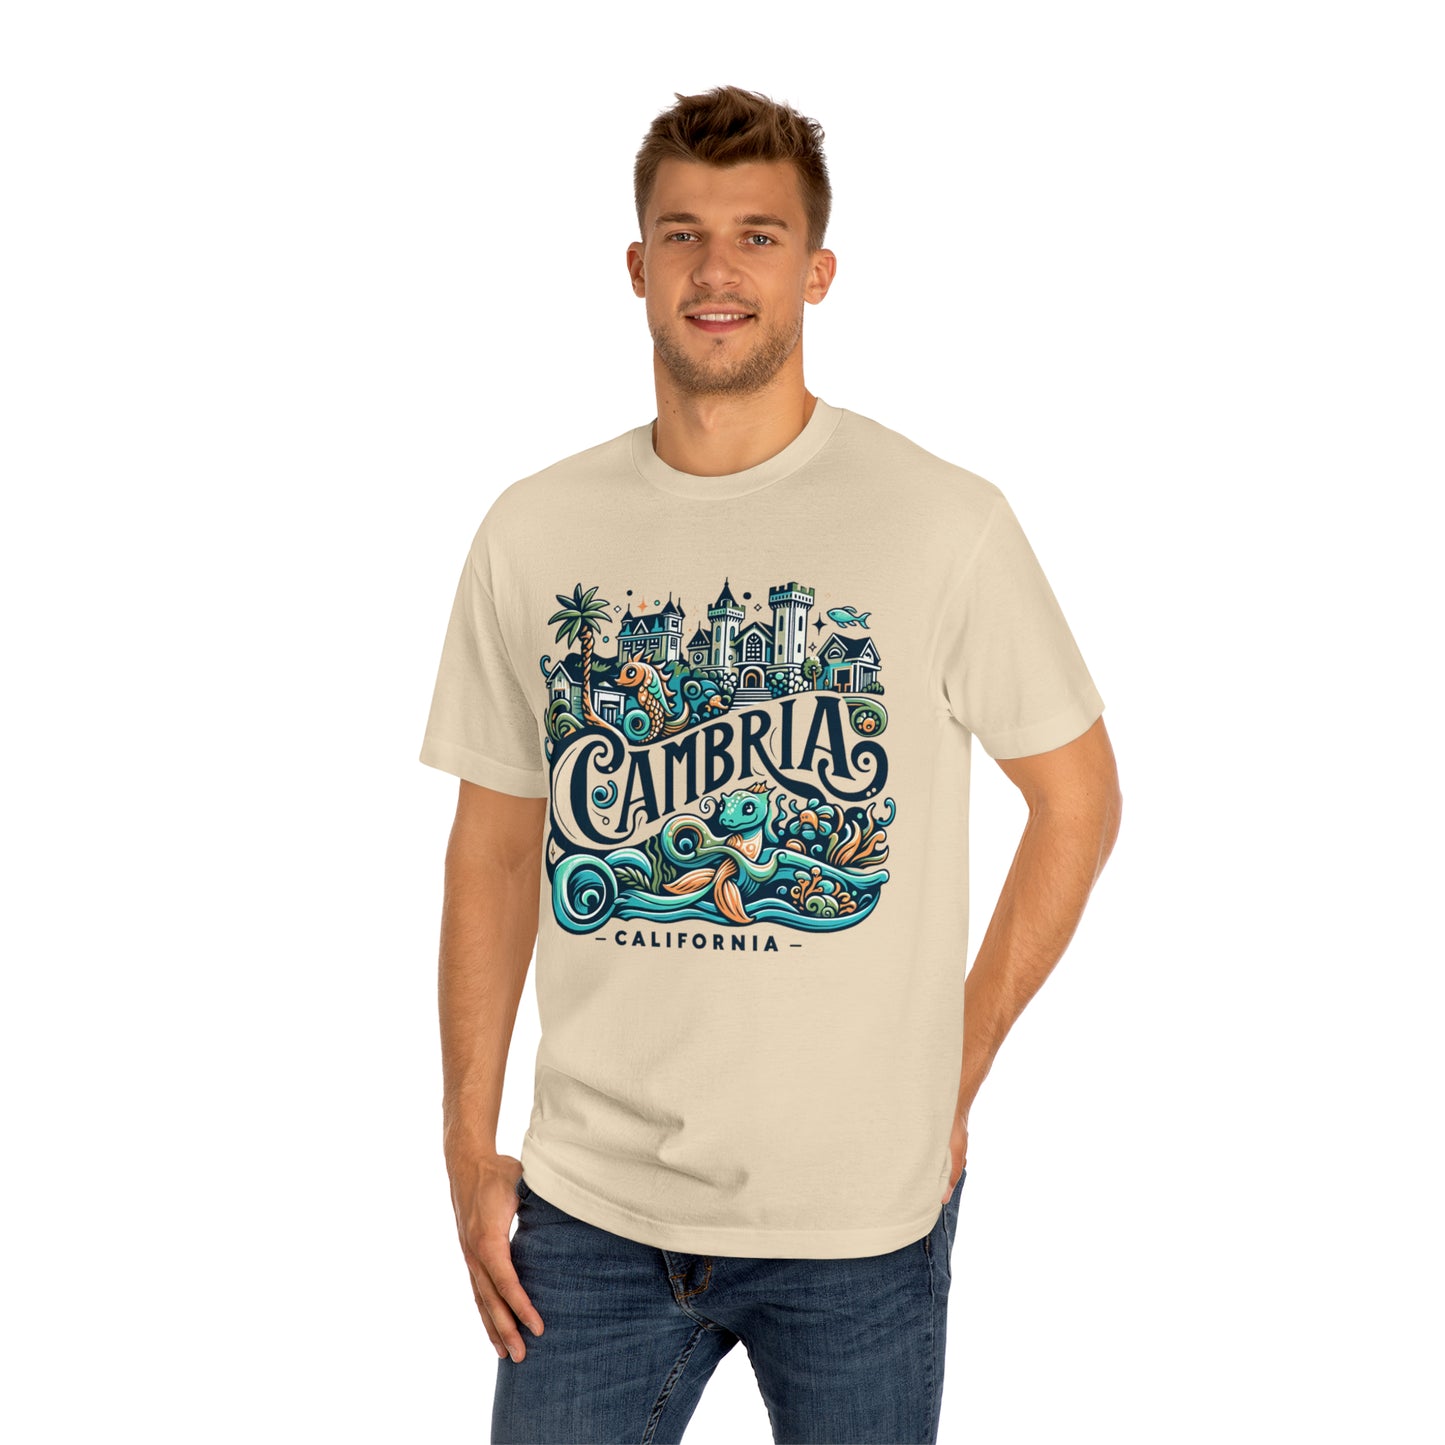 Cambria California Whimsical Coastal Town Tee - SLO CAL Sunshine Spirit Unisex T-shirt